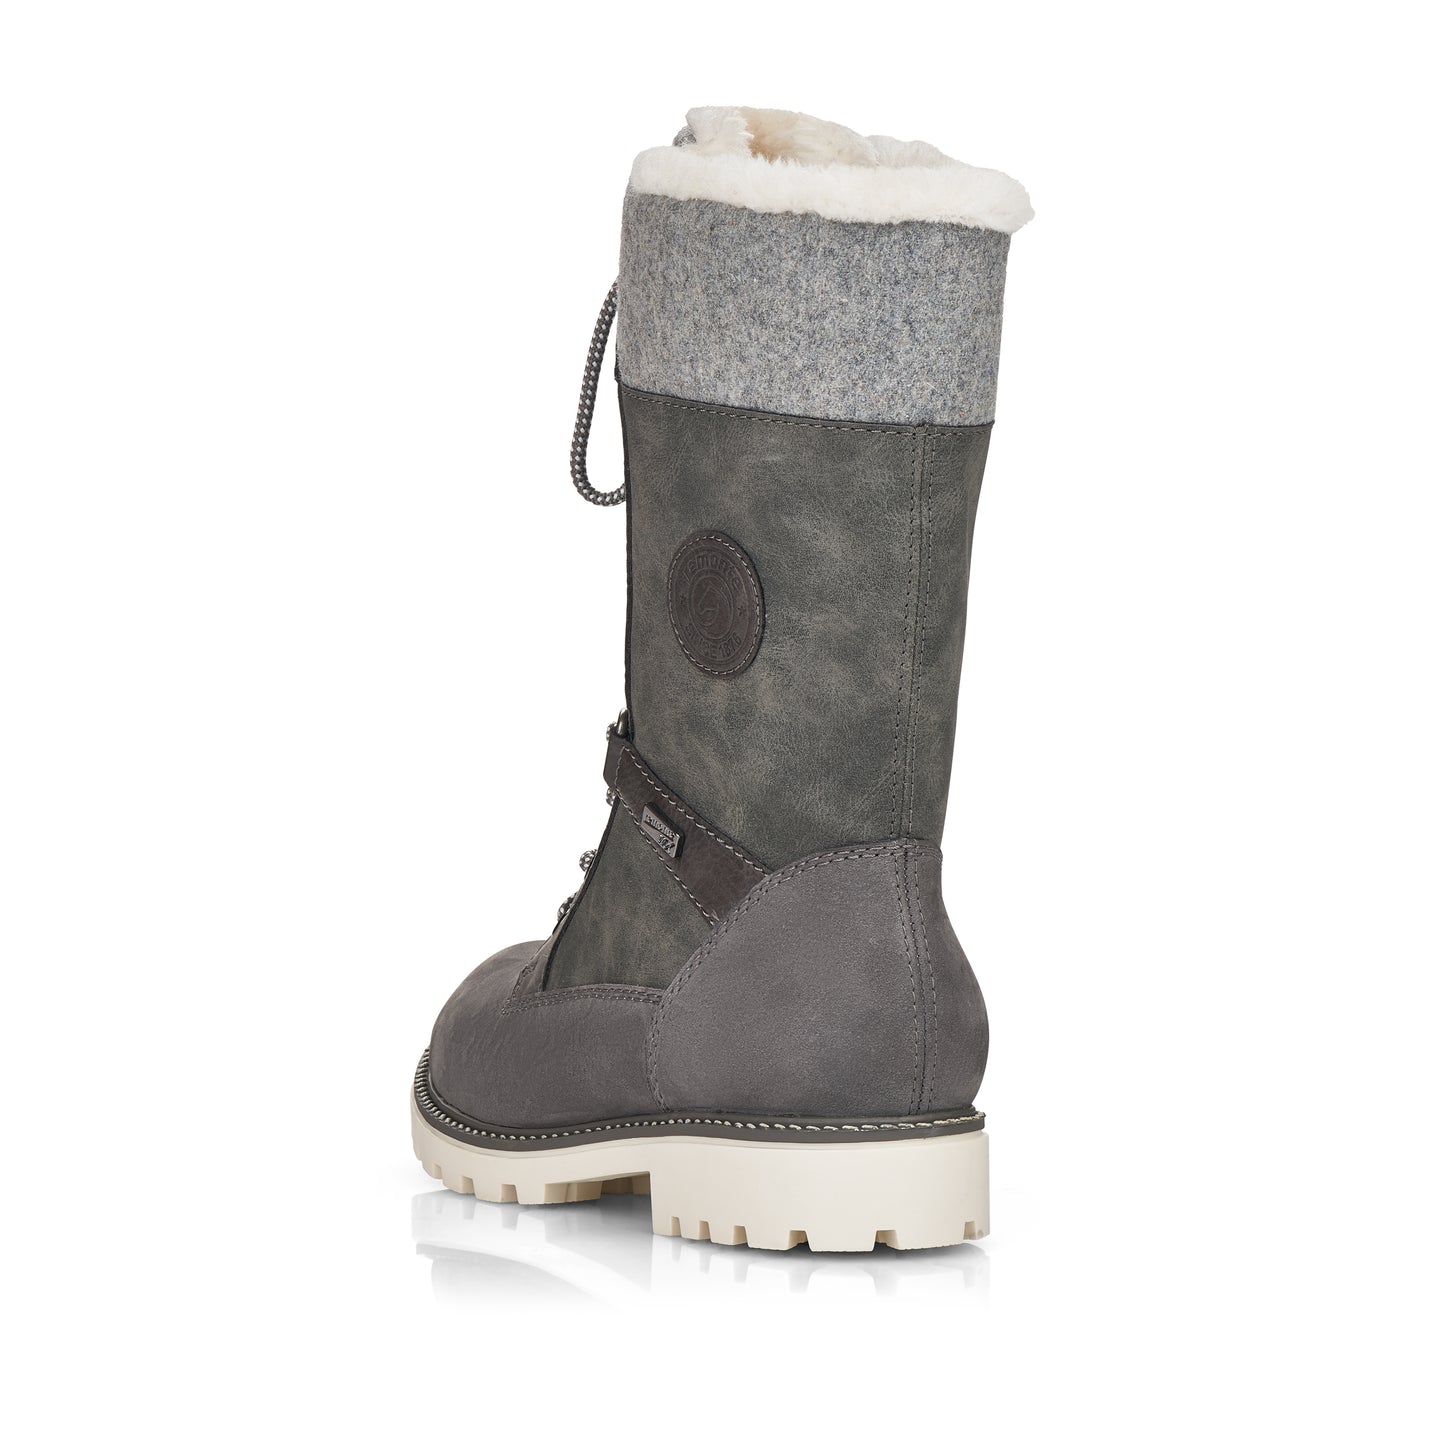 Rieker Women's Samira 74 Water Resistant Boots - Granit/Smoke/Fumo/Grey/Bianco